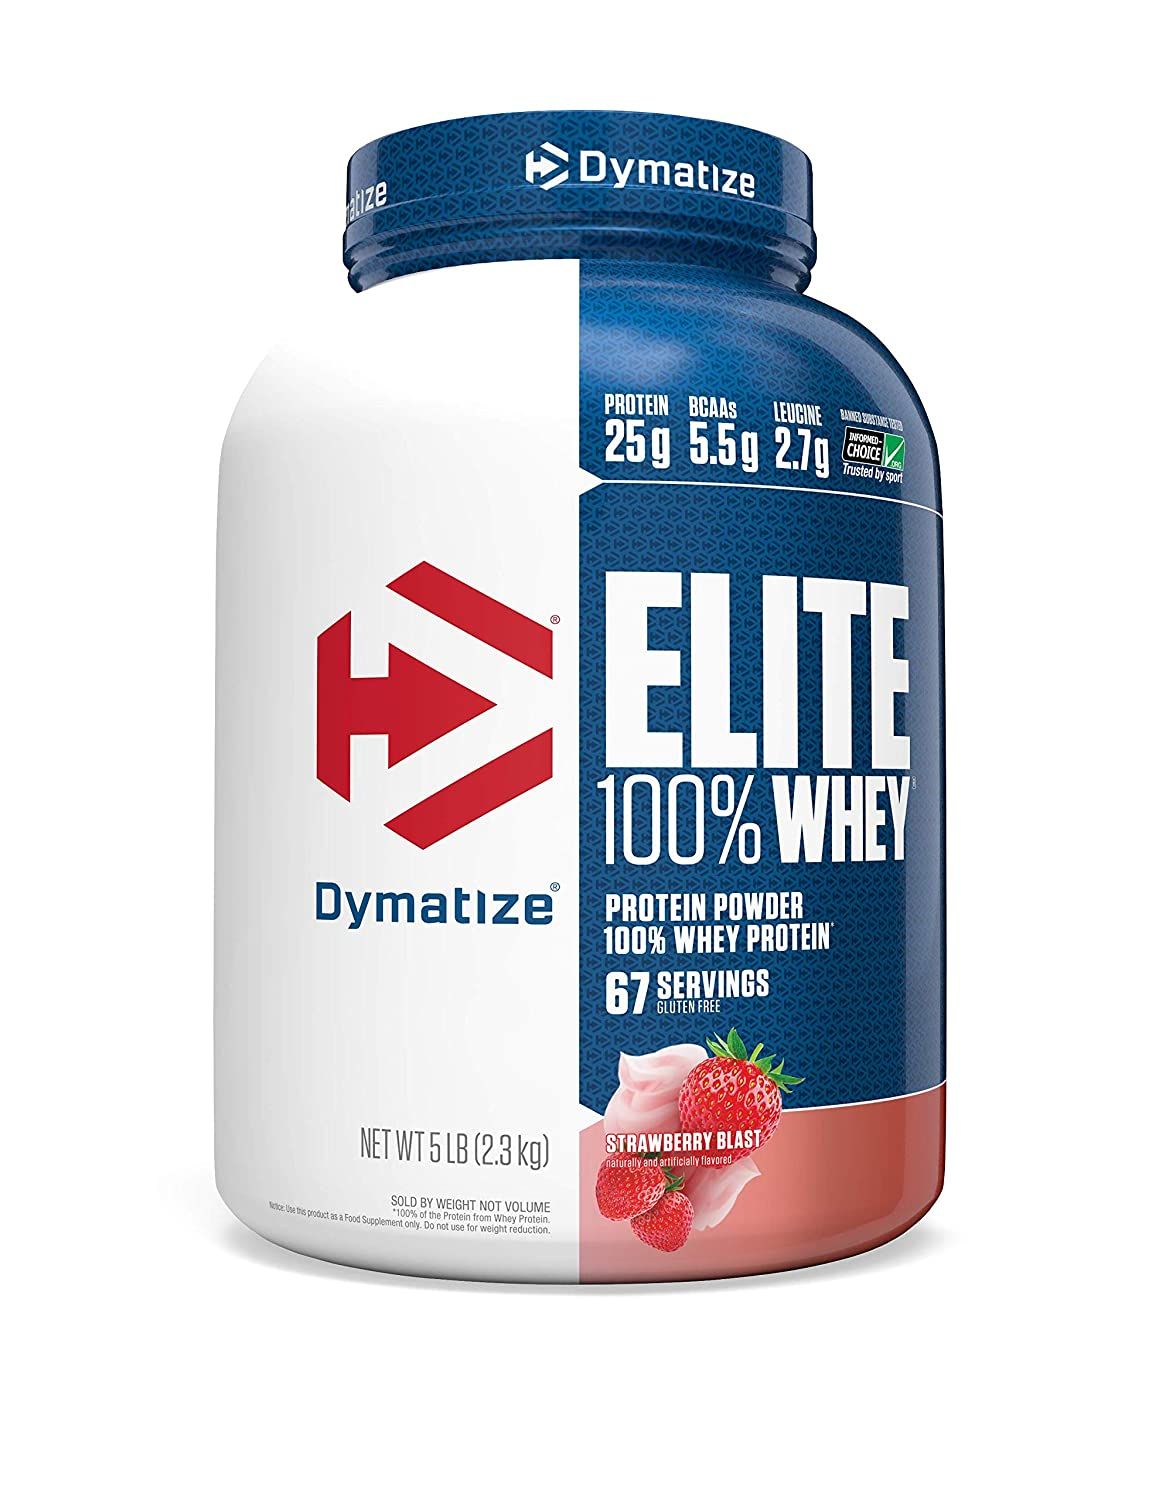 Dymatize Elite Whey Protein Supplement Powder Strawberry Blast Image